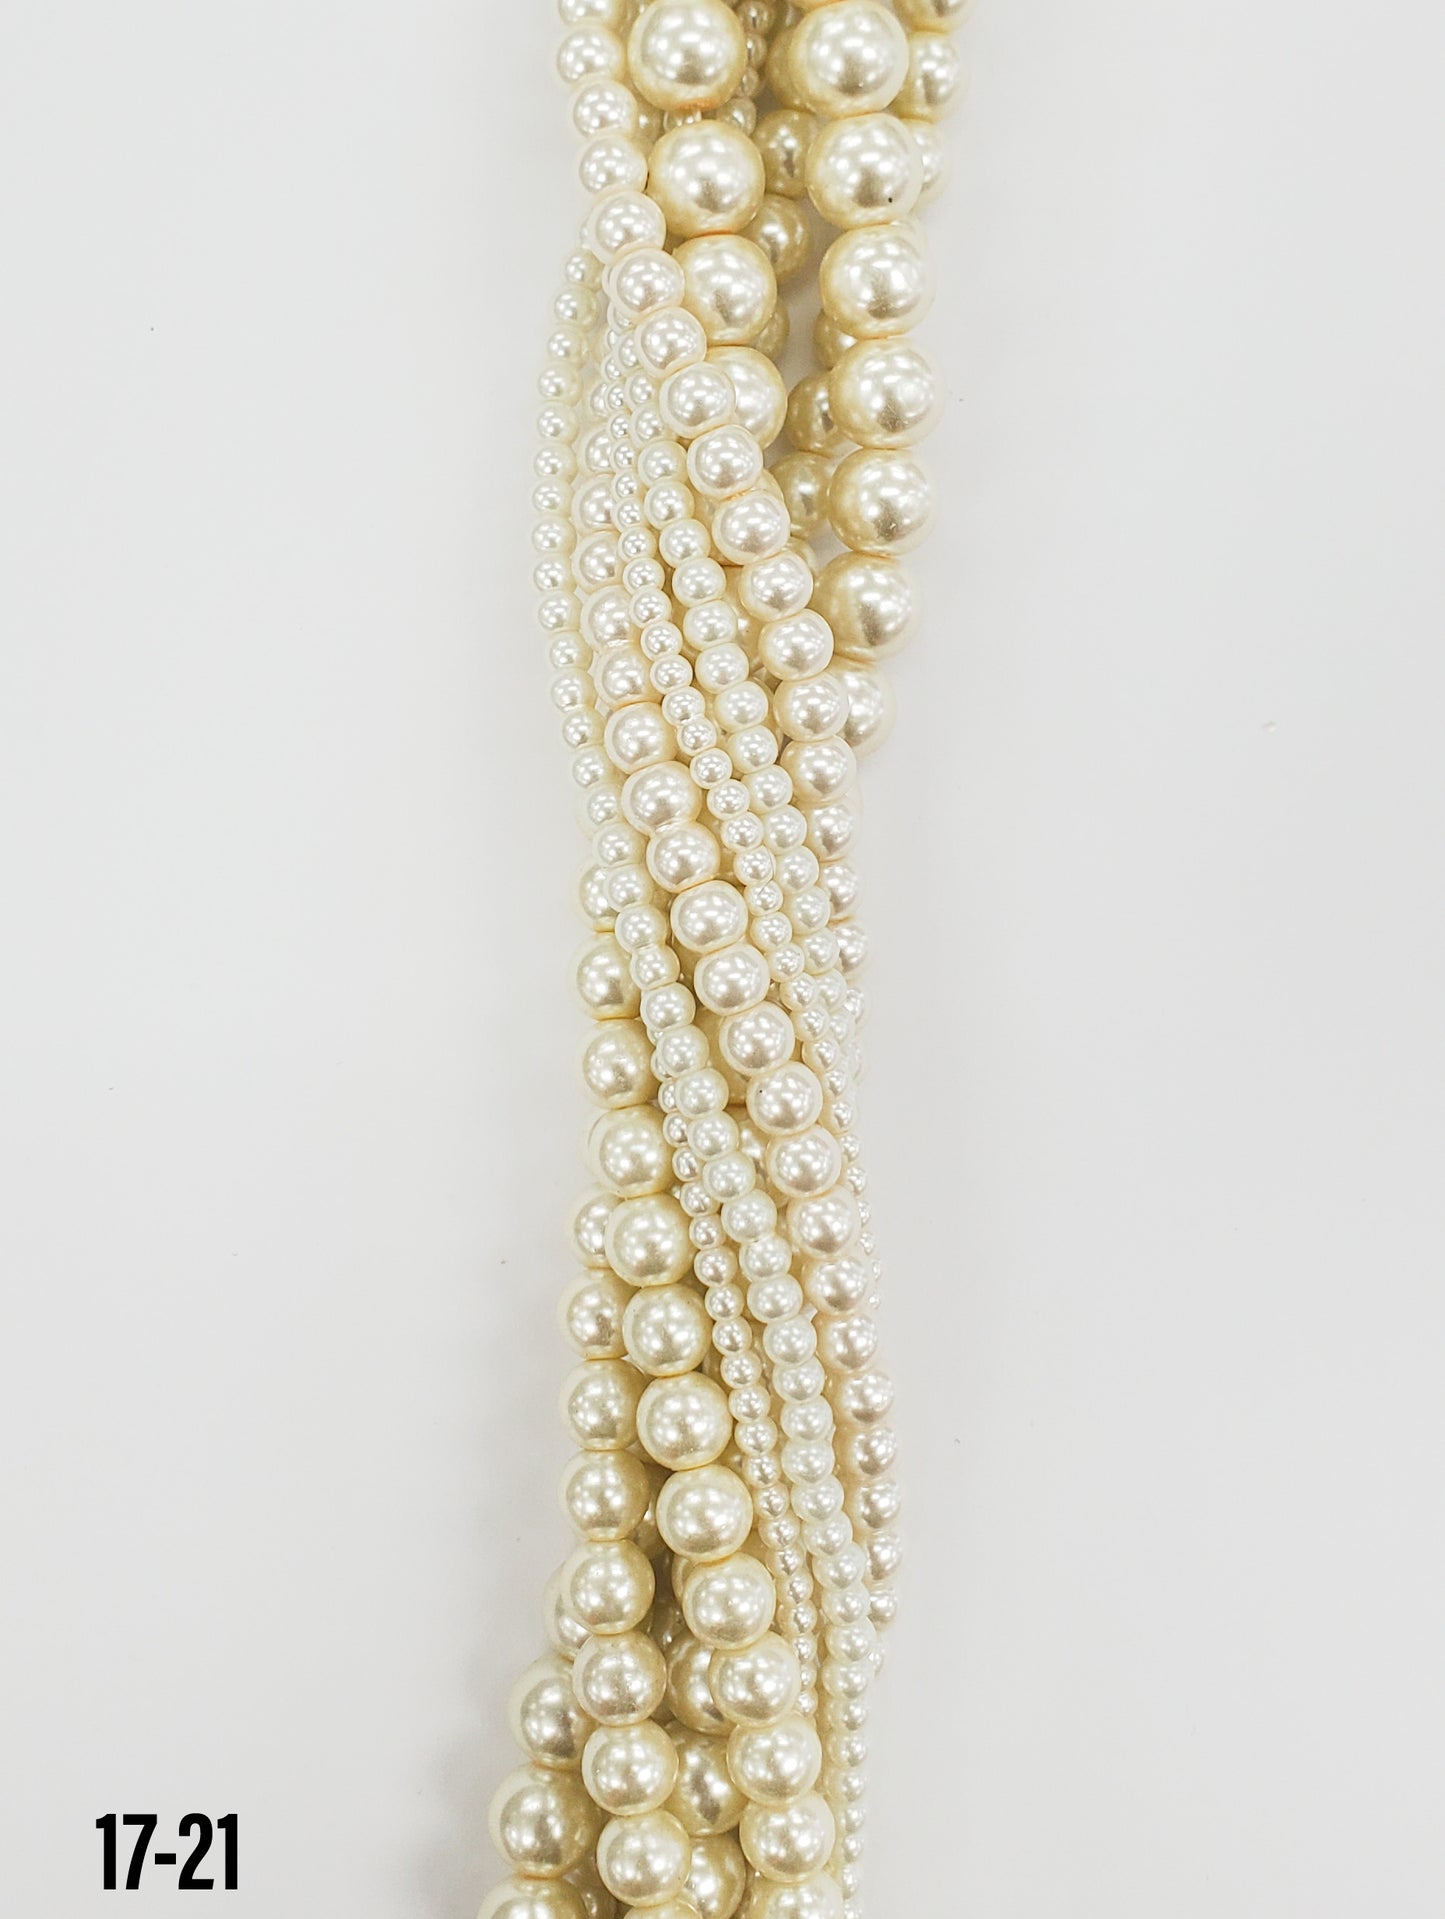 Off-White, Cream Colour Glass Pearls 3mm